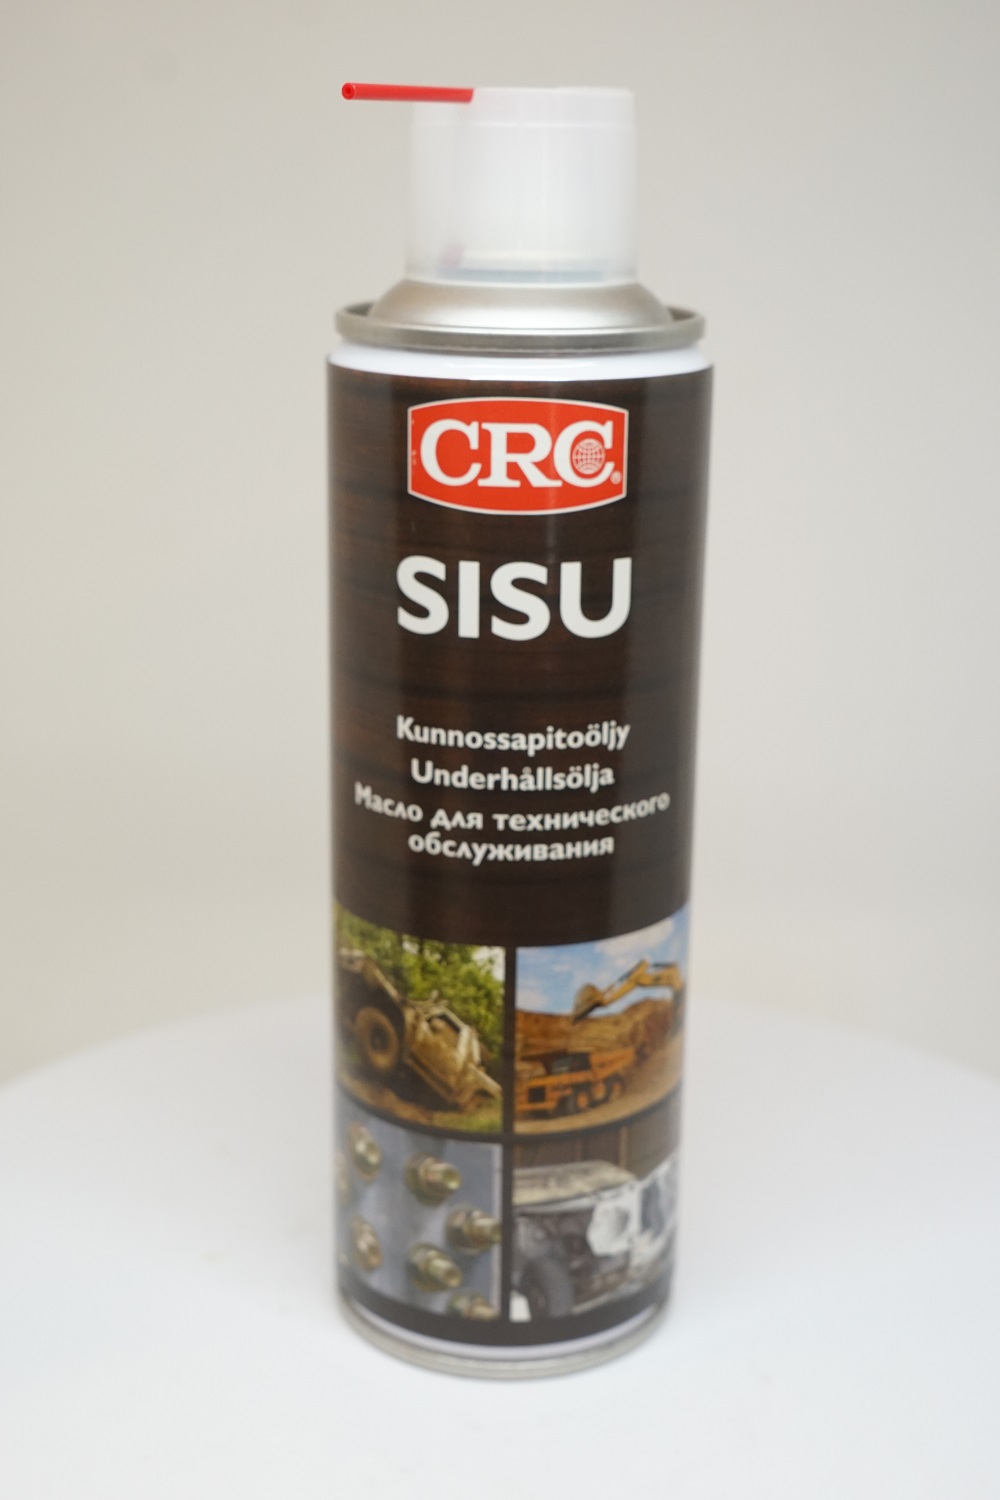 CRC SISU kunnossapitoöljy spray 300ml